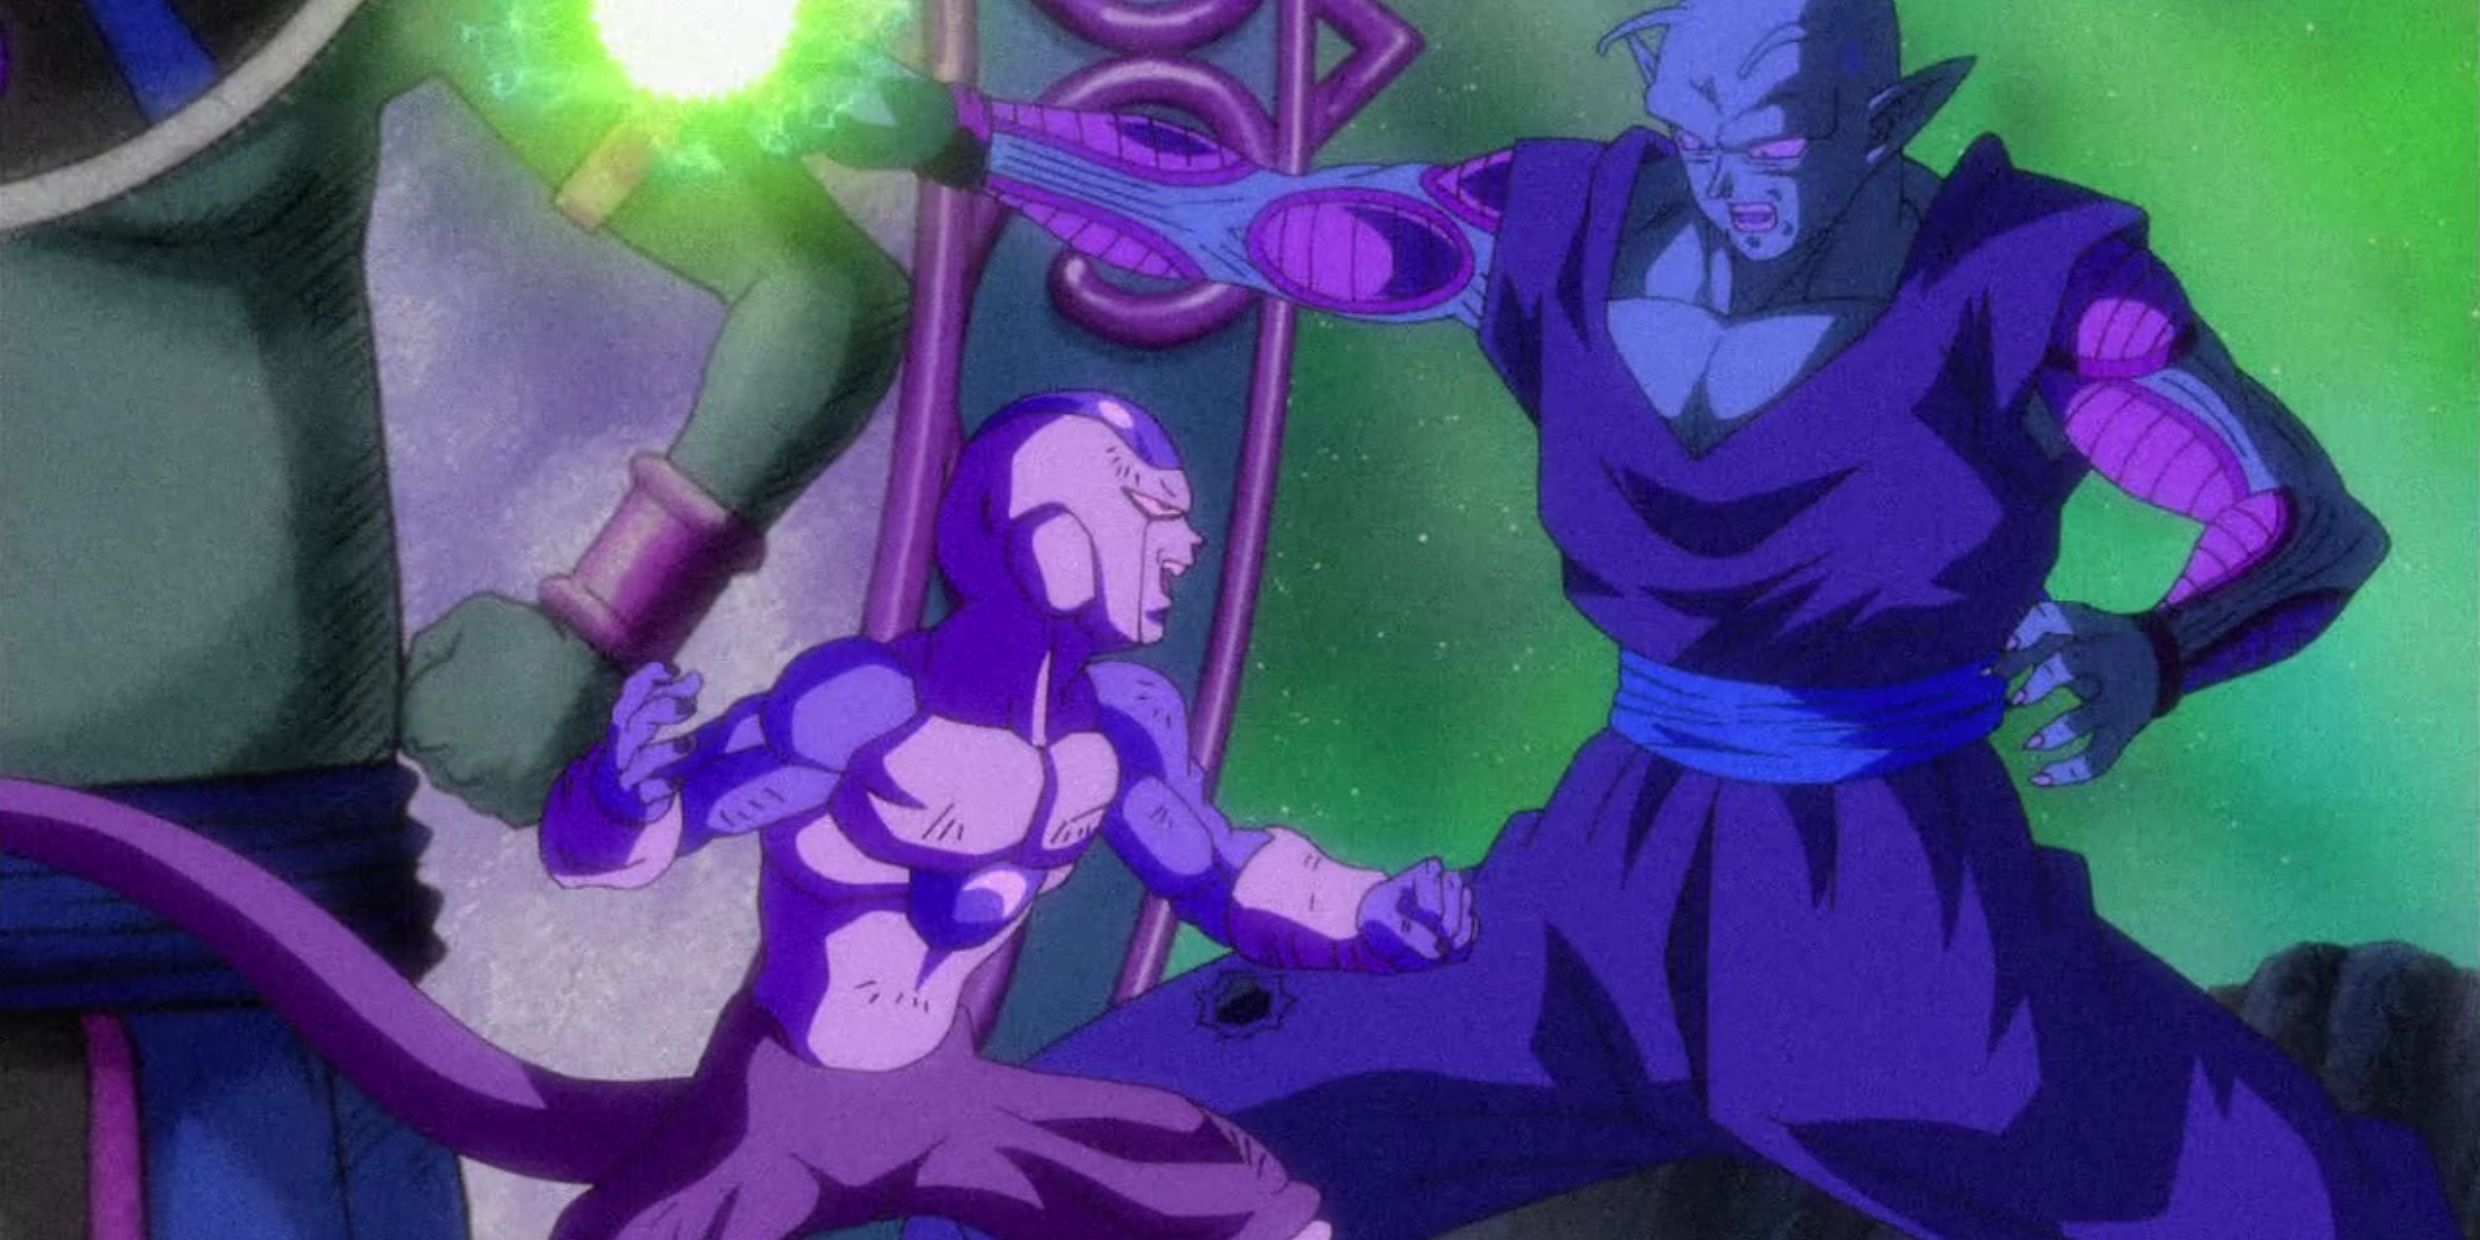 Piccolo e Frost lutam entre si no Torneio de Destruidores em Dragon Ball Super.